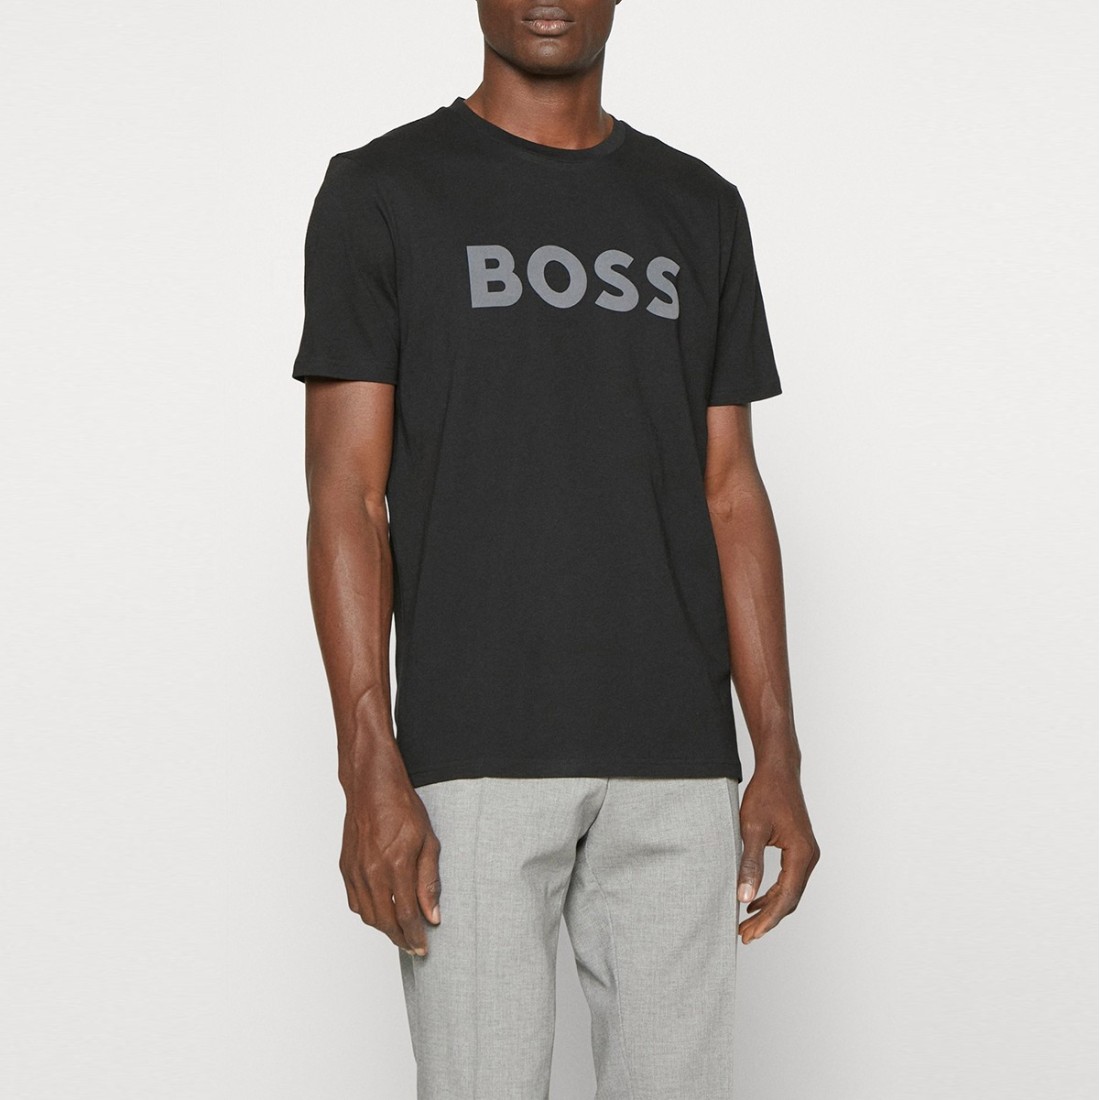 Image of BOSS - T-shirt Thinking - Colore: Nero,Taglia: L